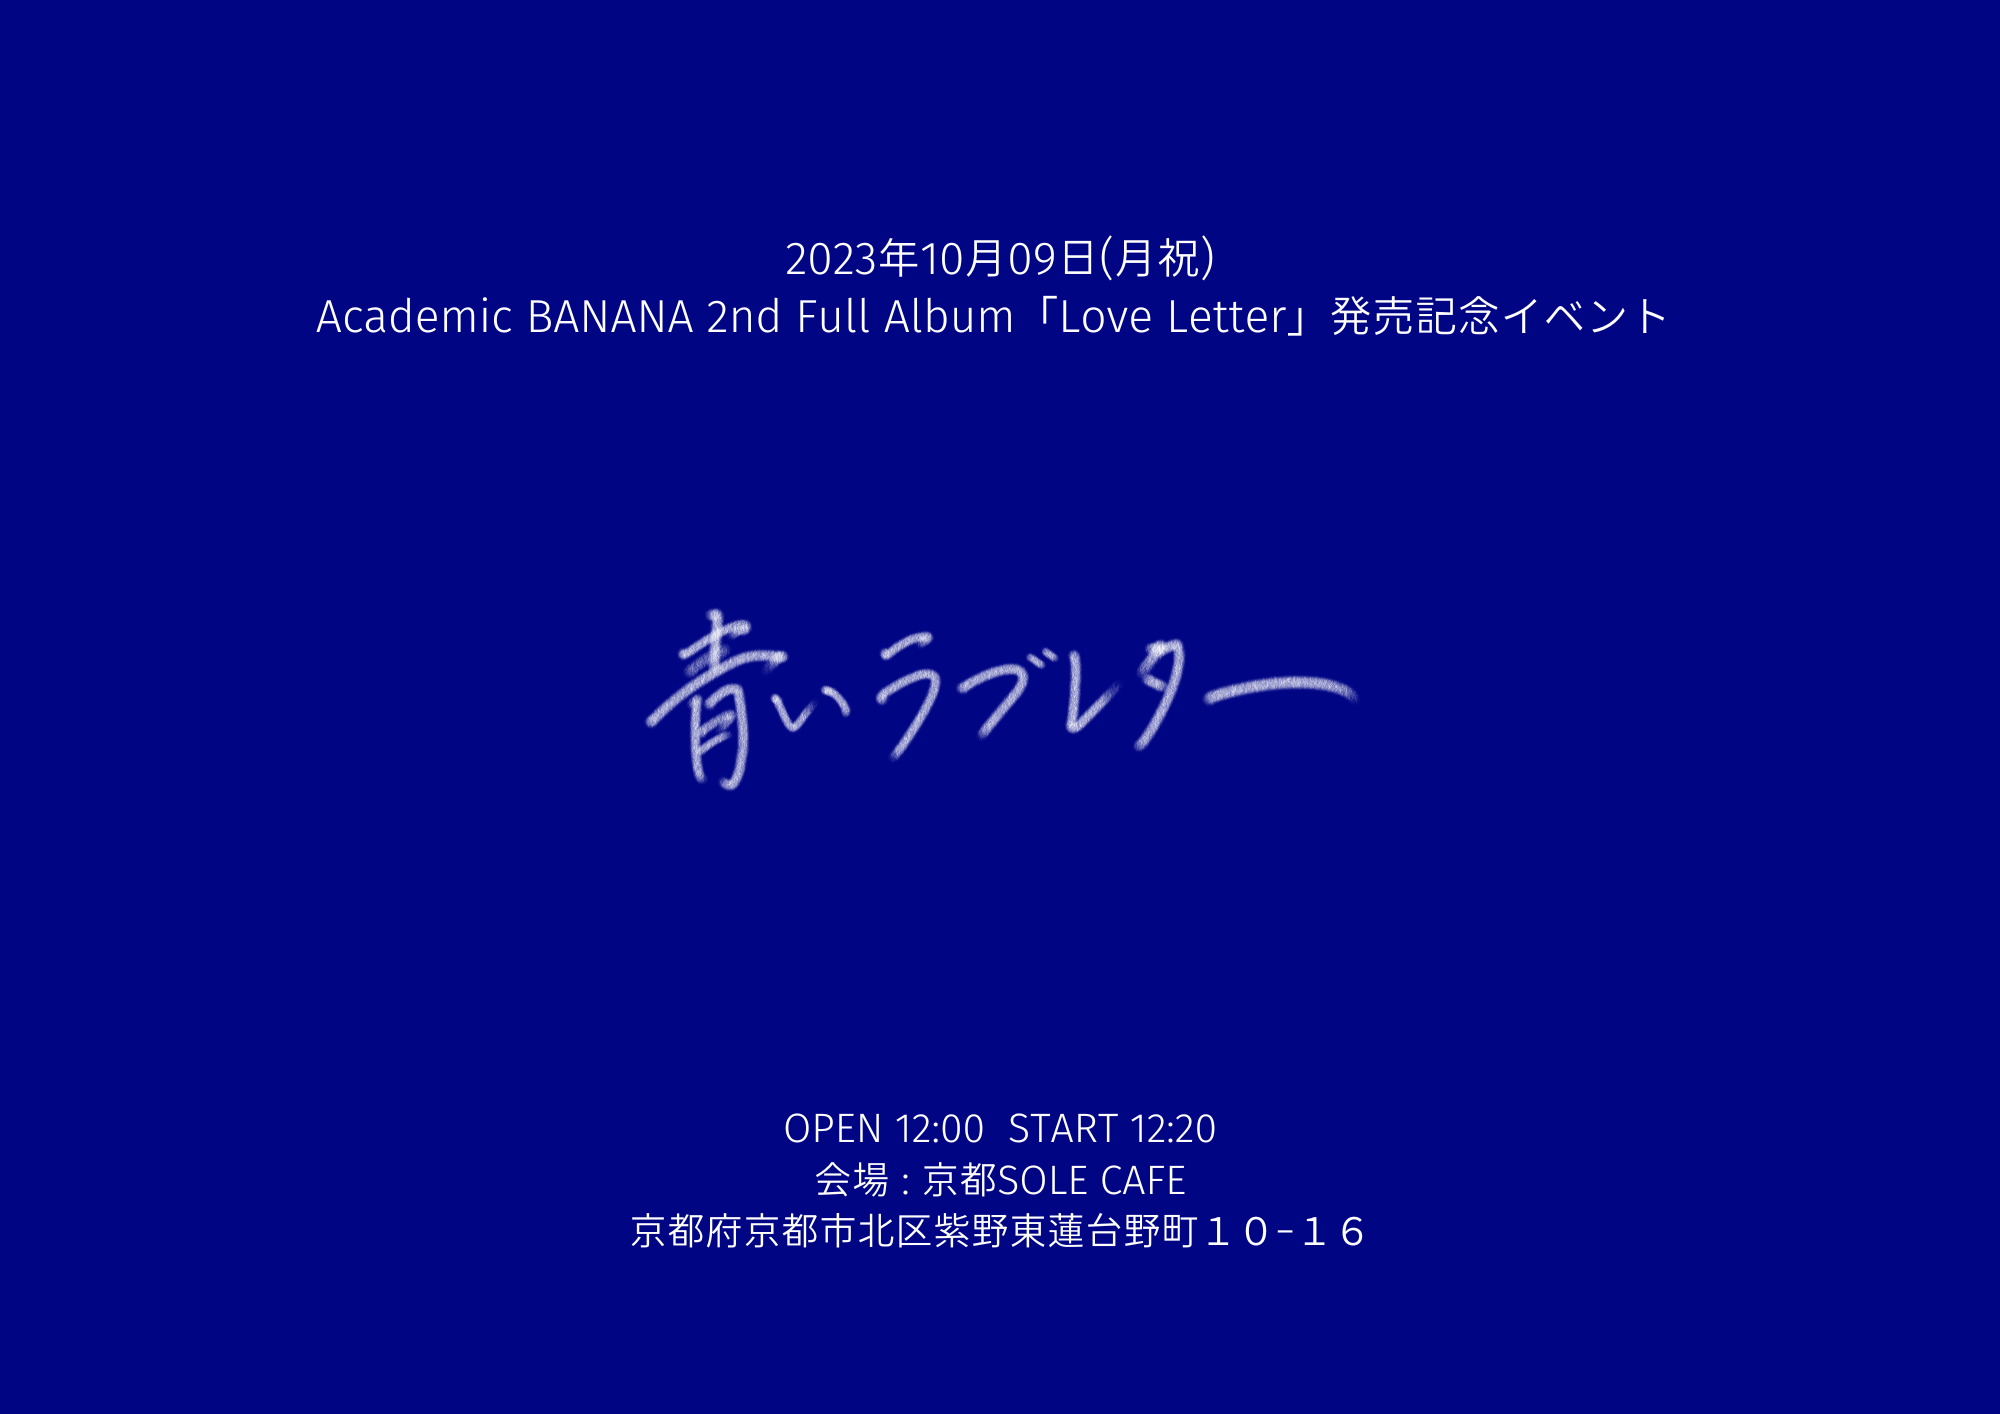 Academic BANANA 2nd Full Album「Love Letter」発売記念イベント 「青いラブレター」